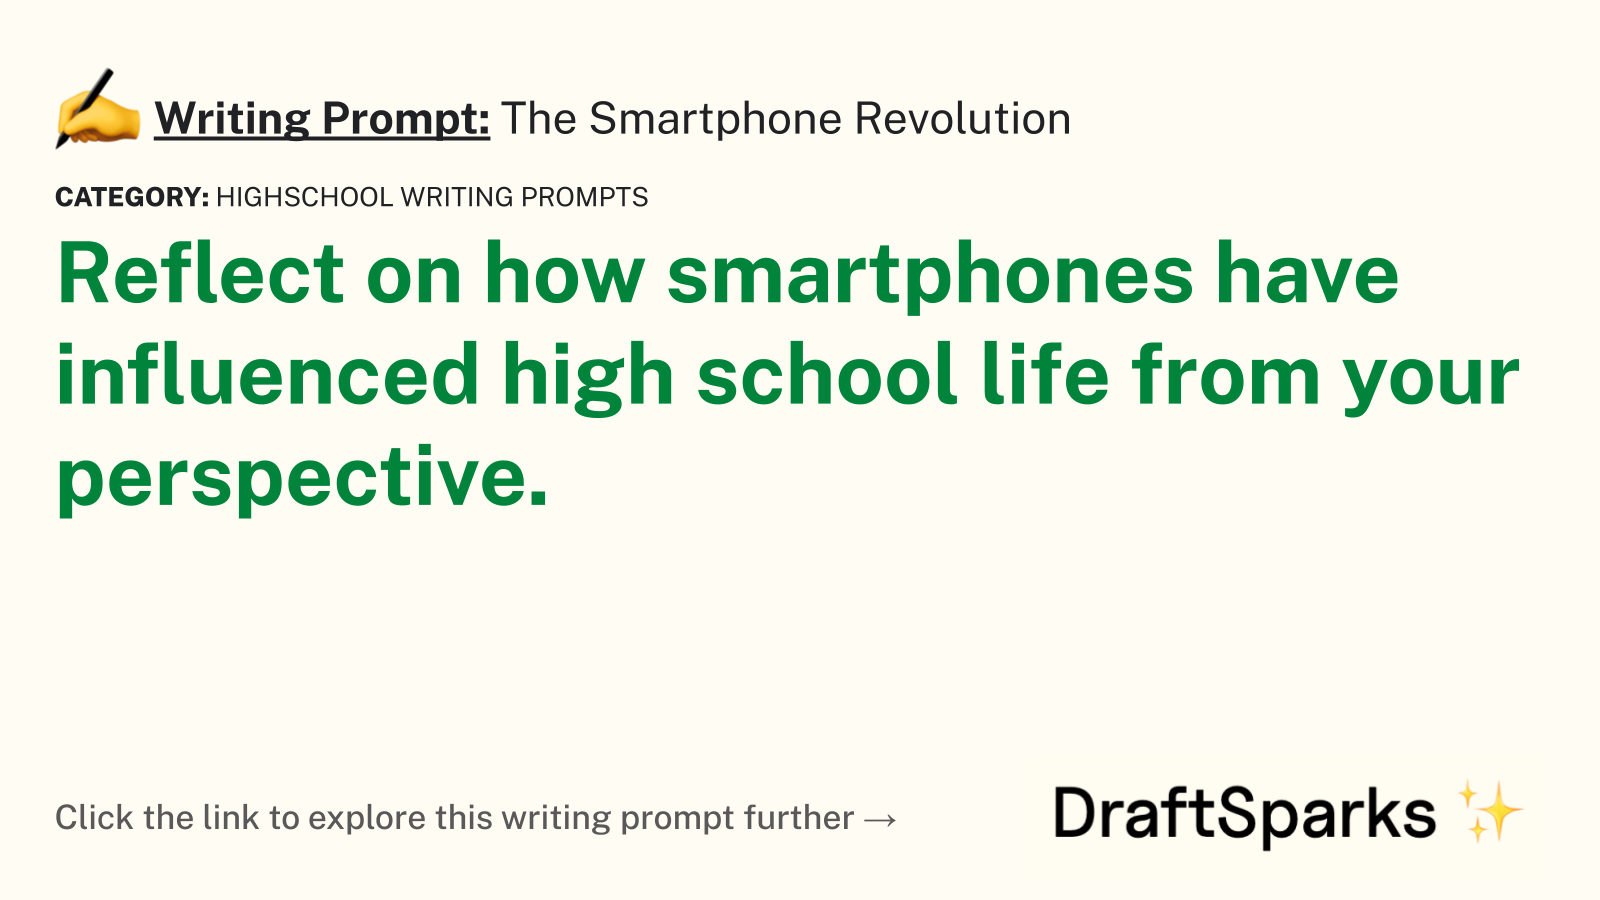 The Smartphone Revolution